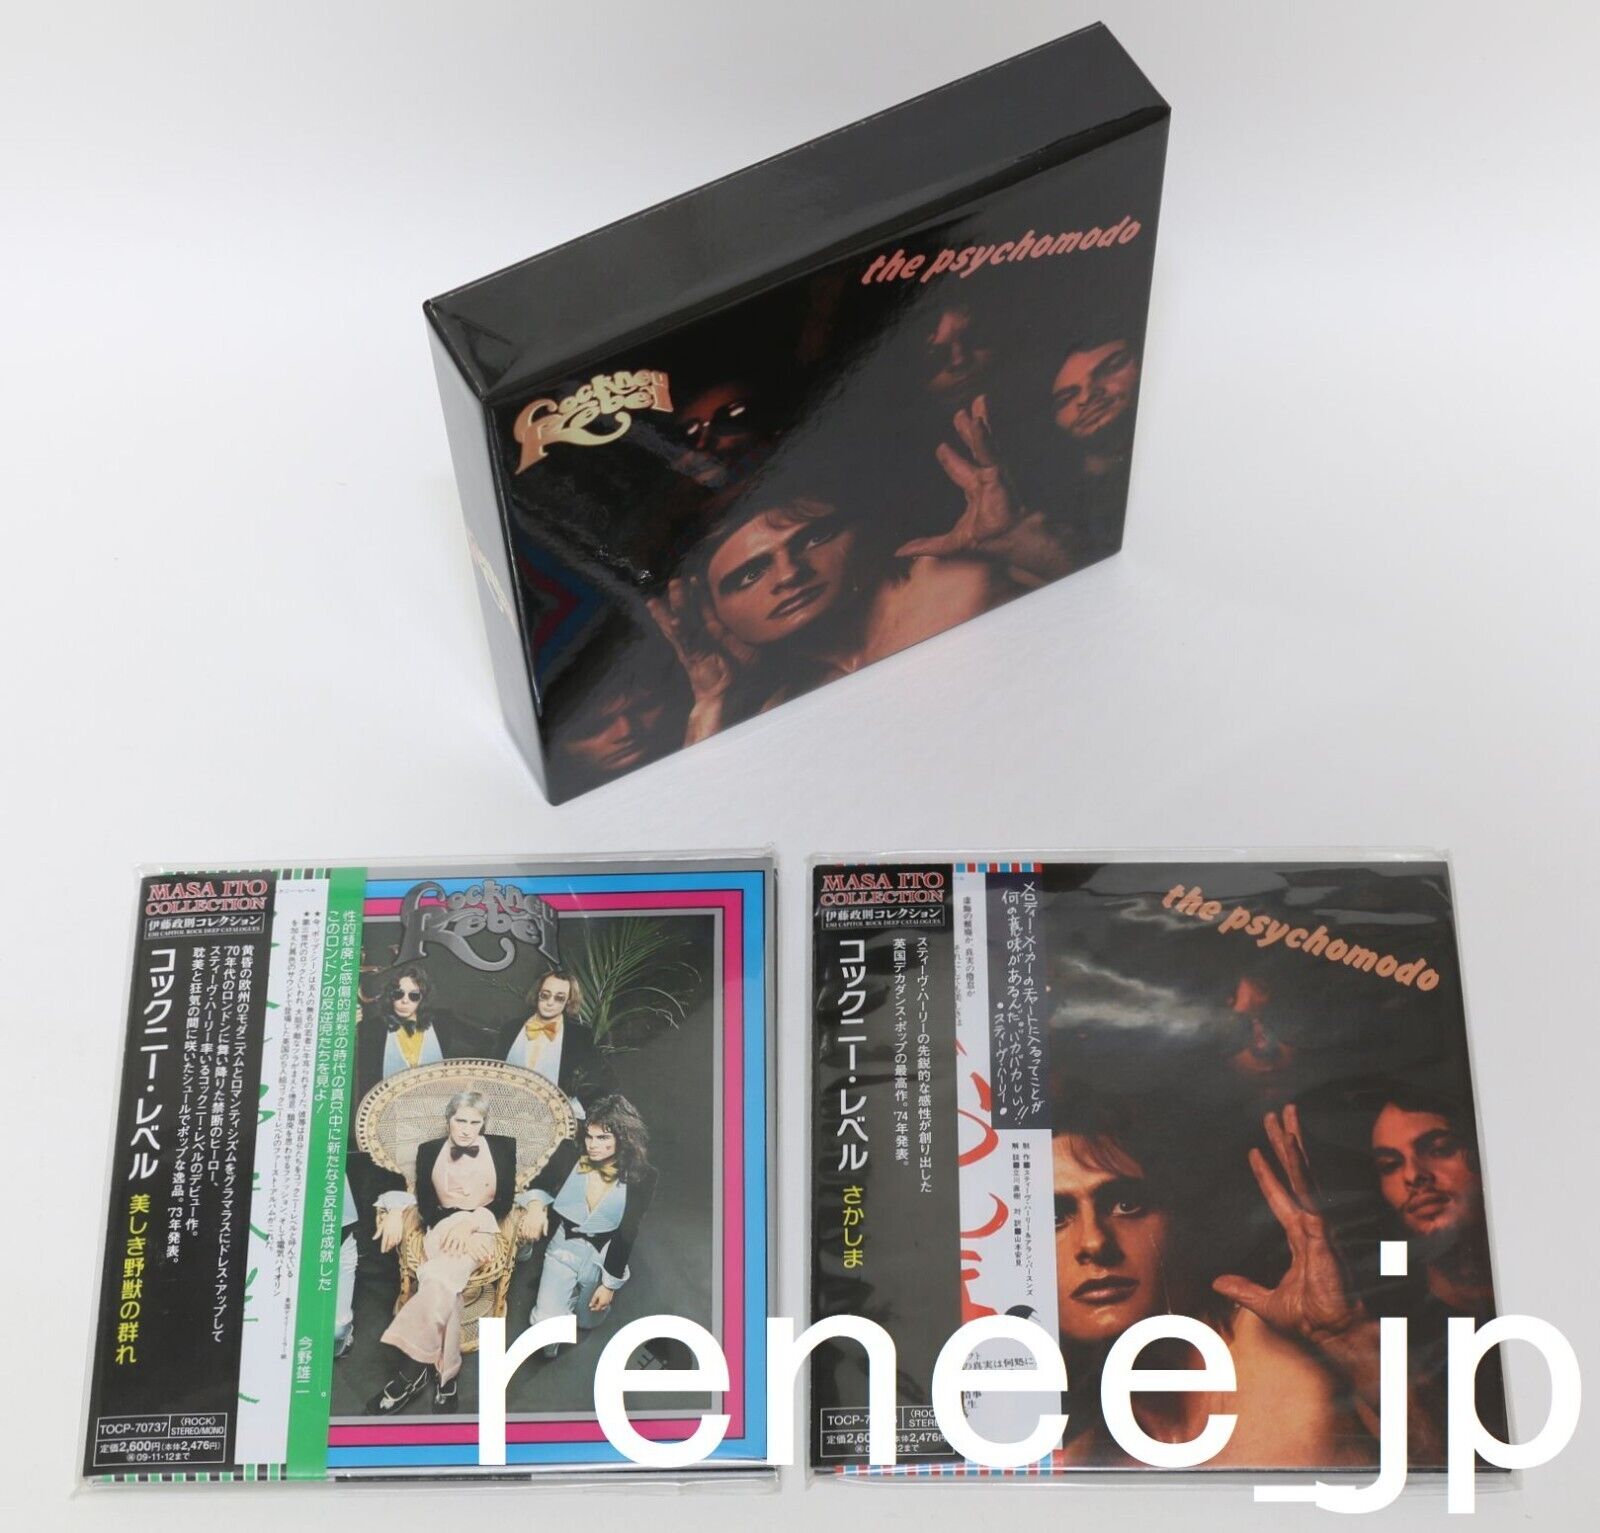 Cockney Rebel / JAPAN Mini LP CD x 2 titles + PROMO BOX Set - Steve Harley -